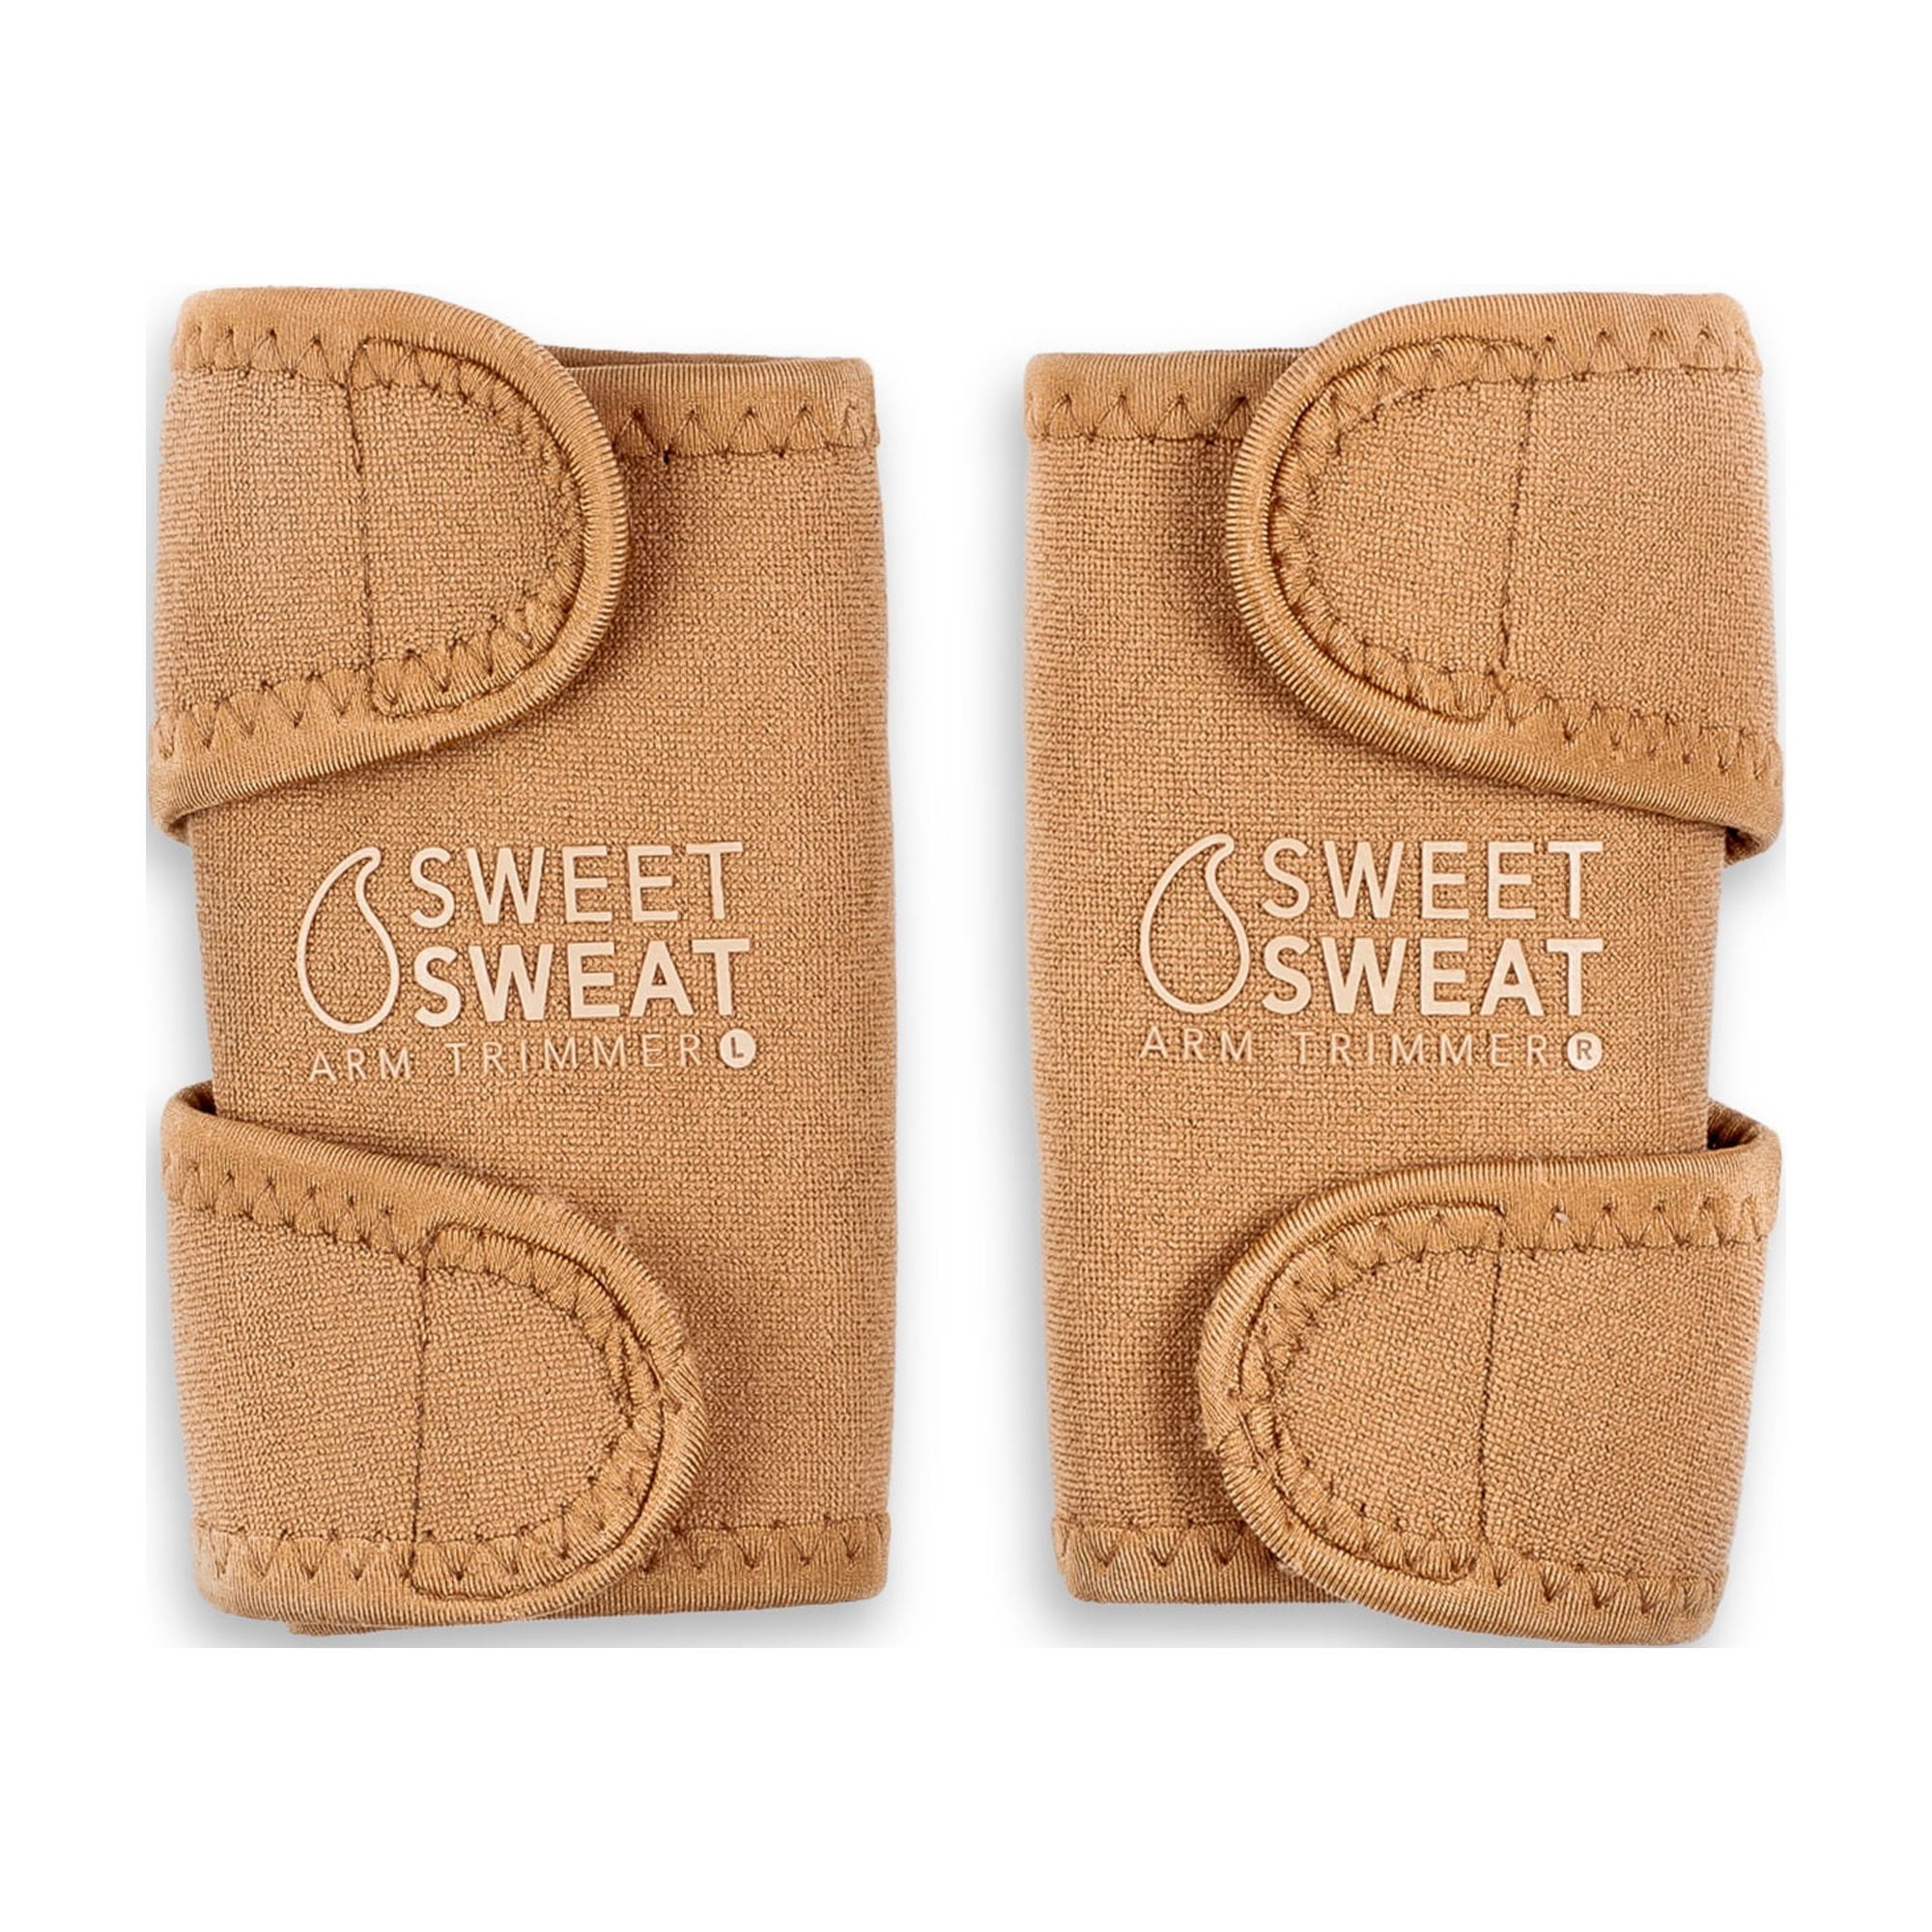 Sweet Sweat Waist Trimmer - Toned Sand XL (51 x 10in) - W/ Wash bag